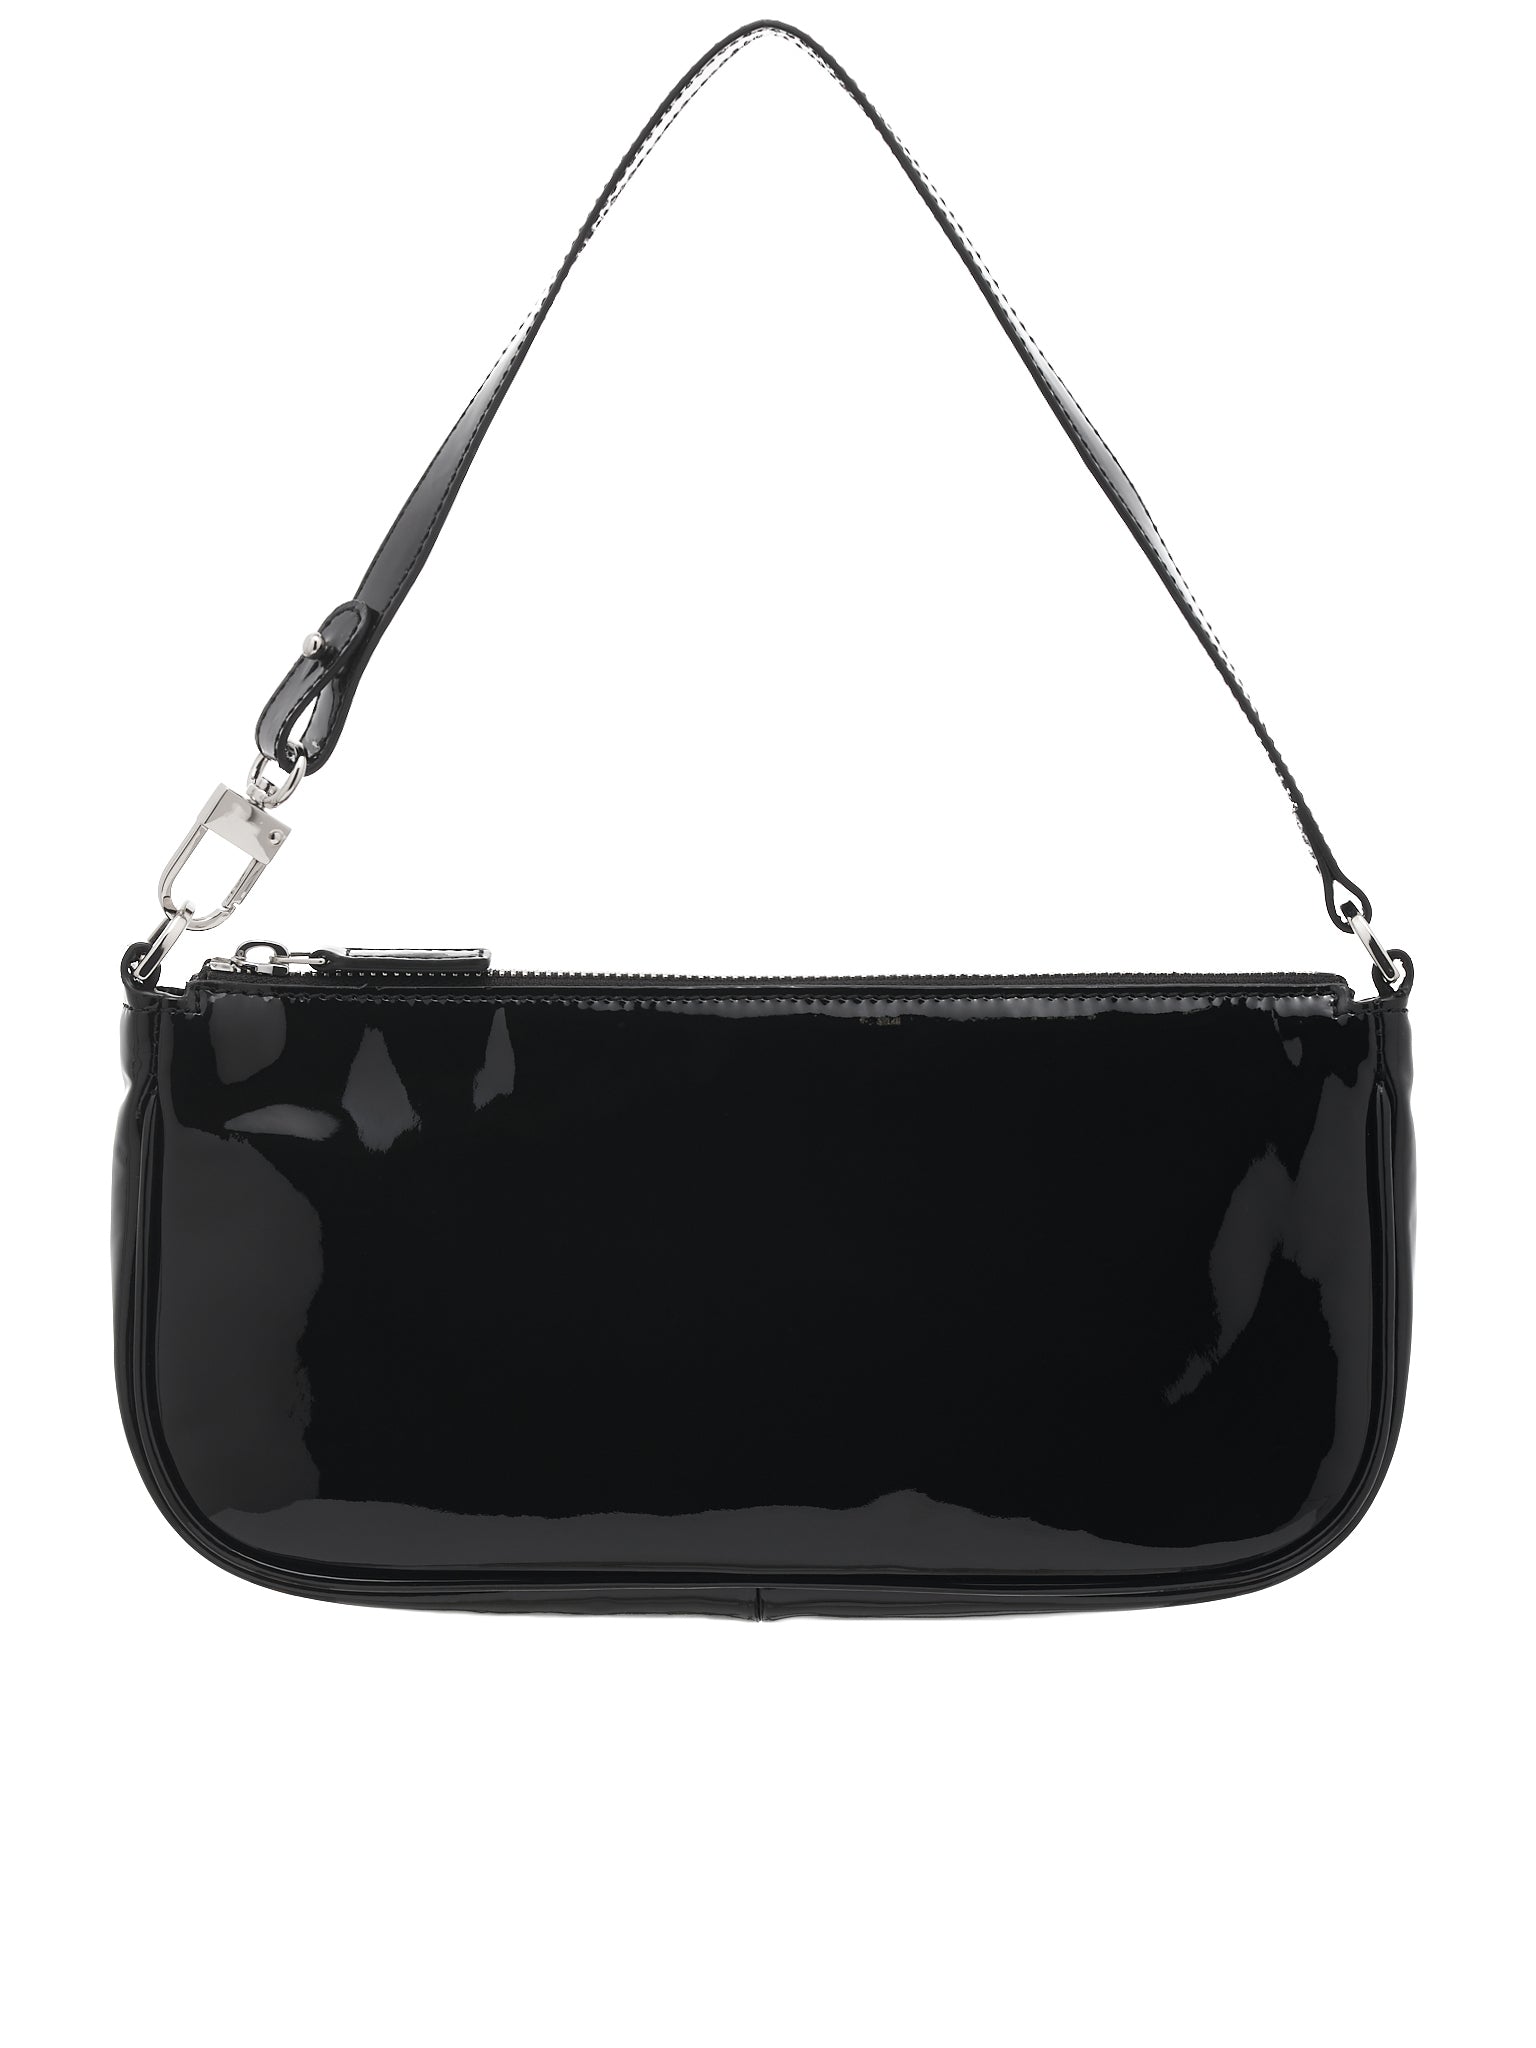 BY FAR Handbags Rachel Patent Leather in Black